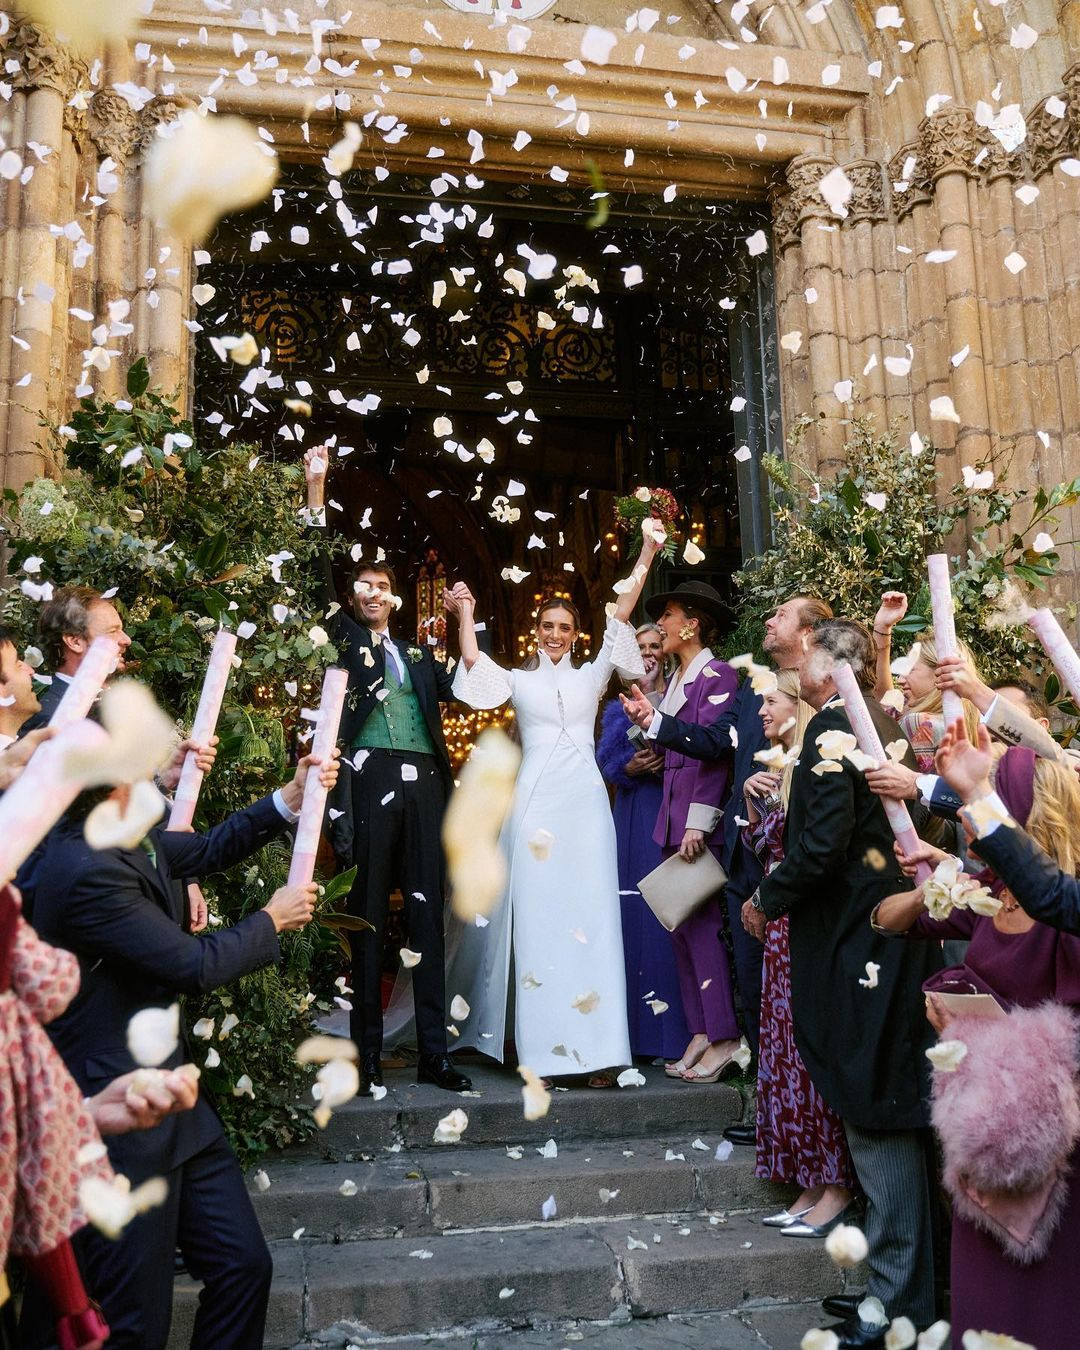 O γάμος έγινε στη Βασιλική La Concepción/Φωτογραφία: Instagram/nnavasψues